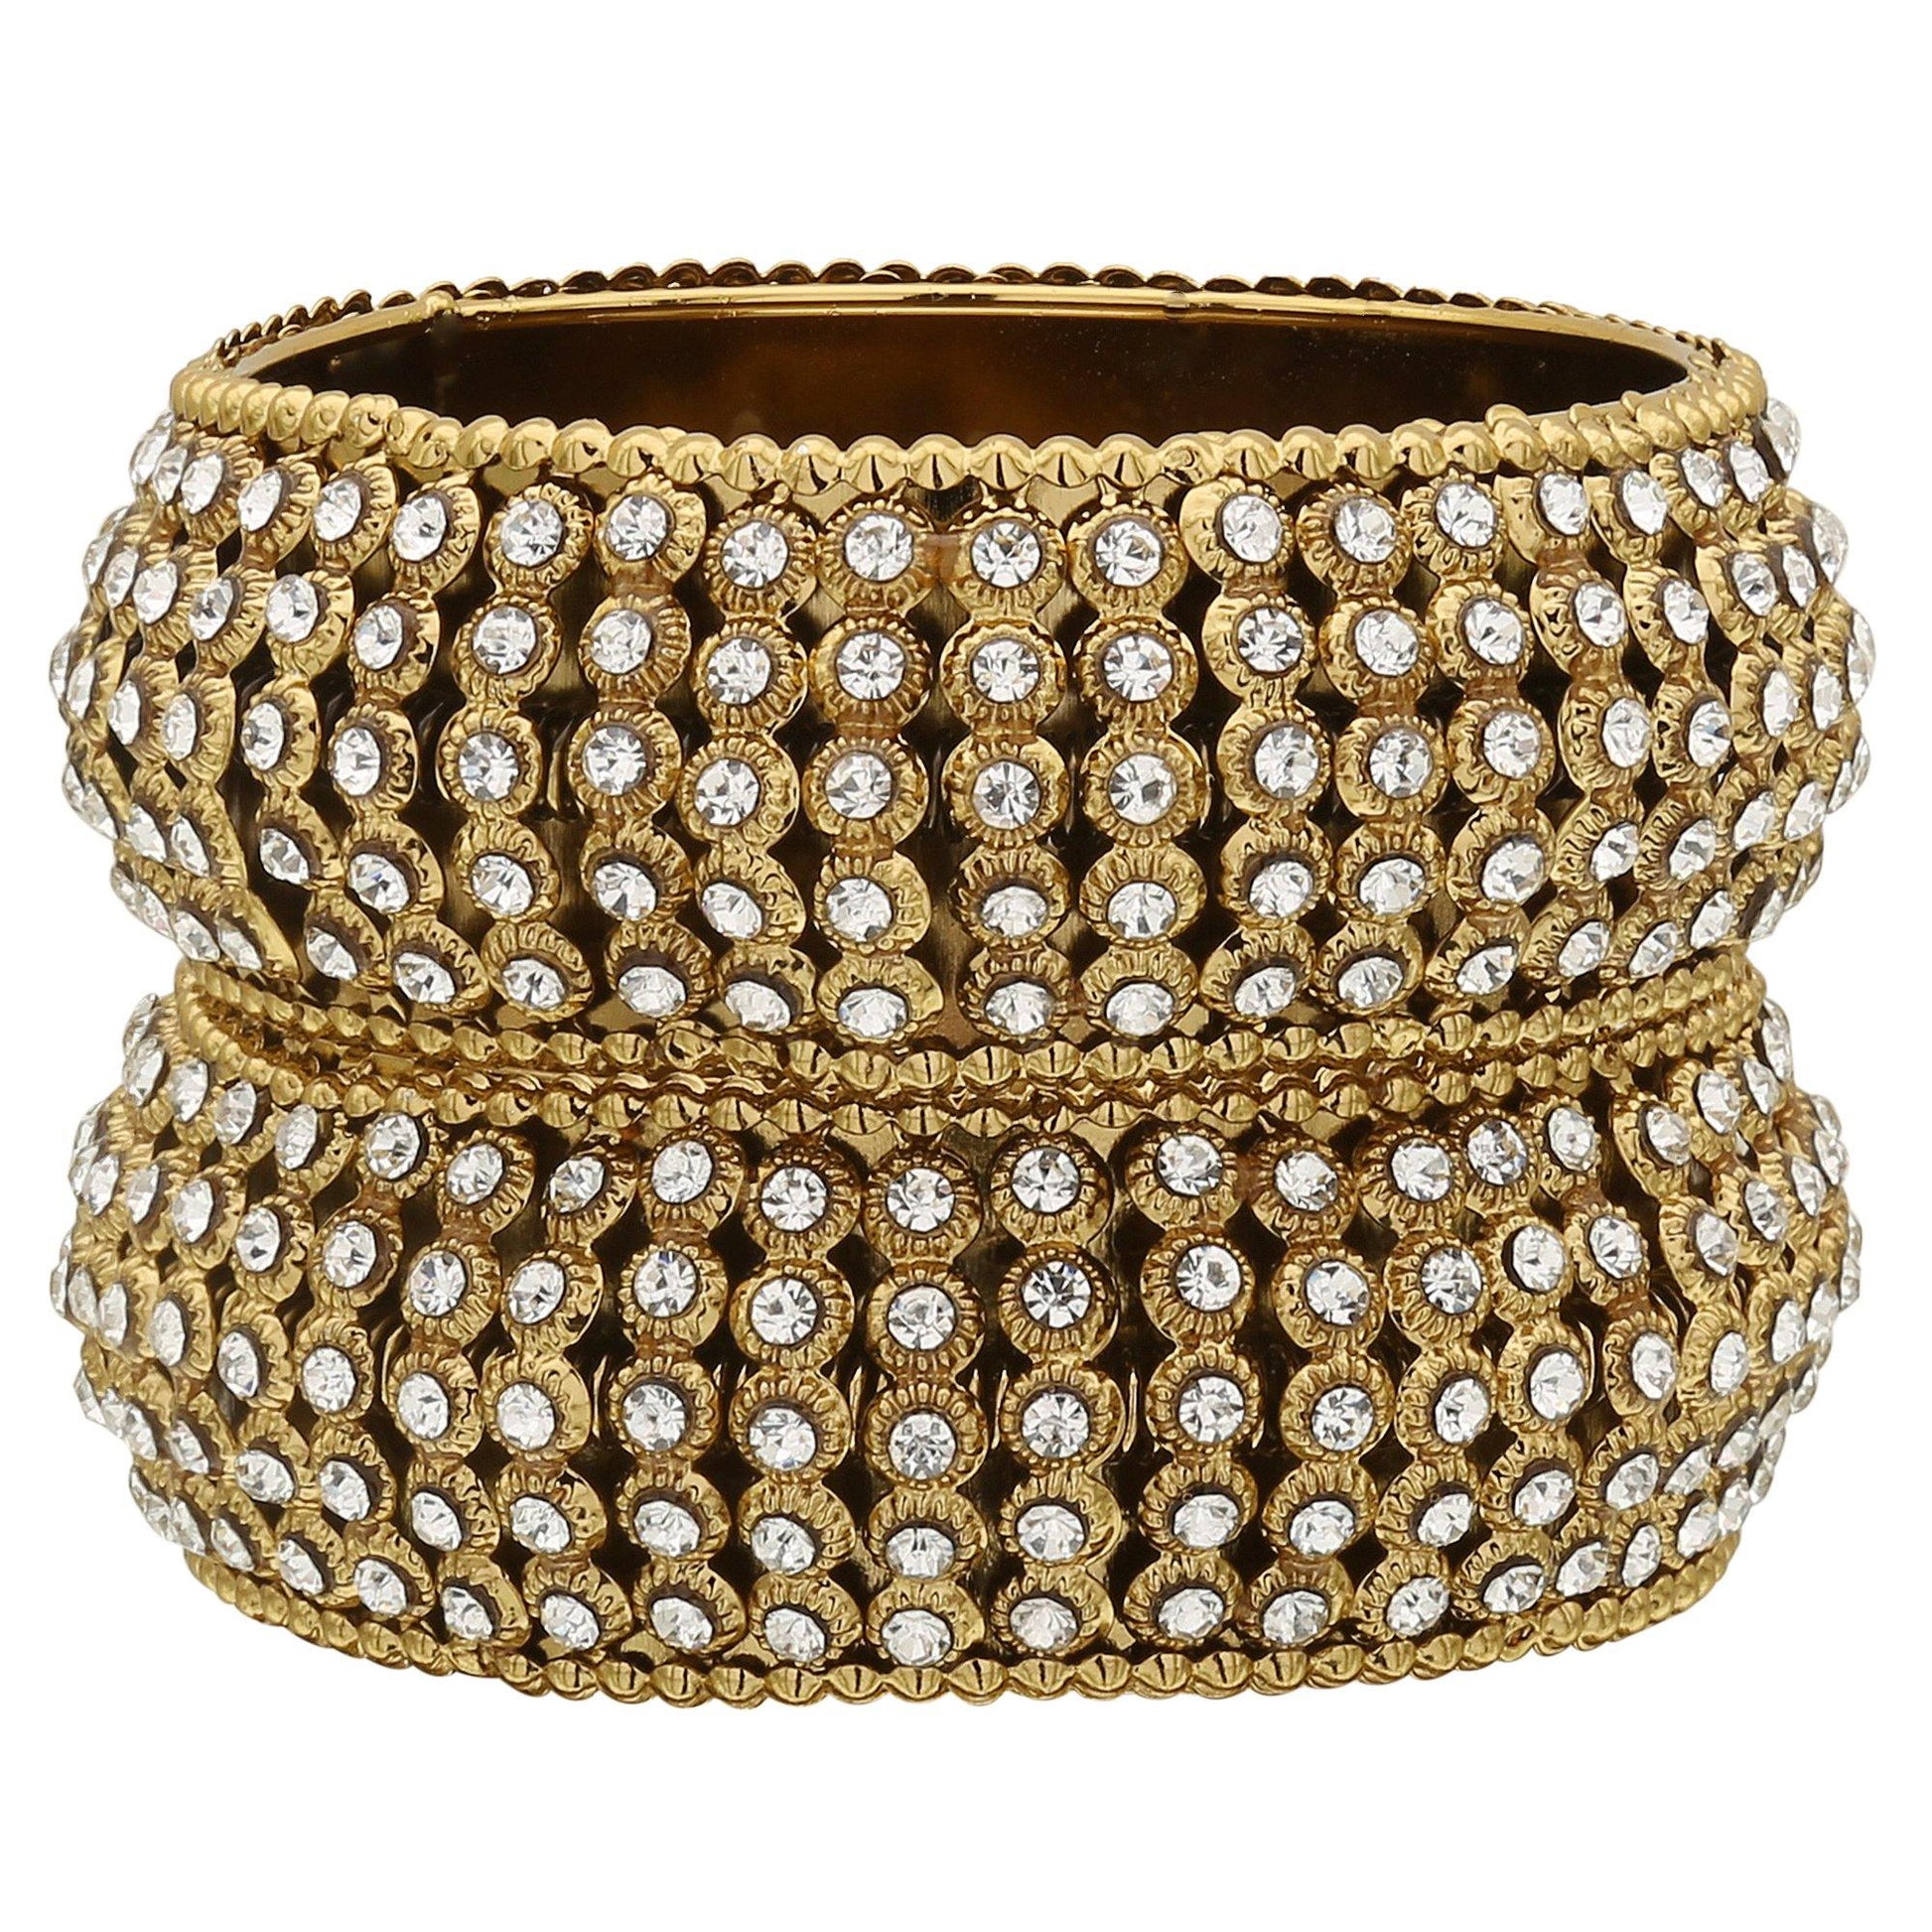 sukriti indian traditional royal gold tone kundan bracelet bangles for girls & women - set of 2